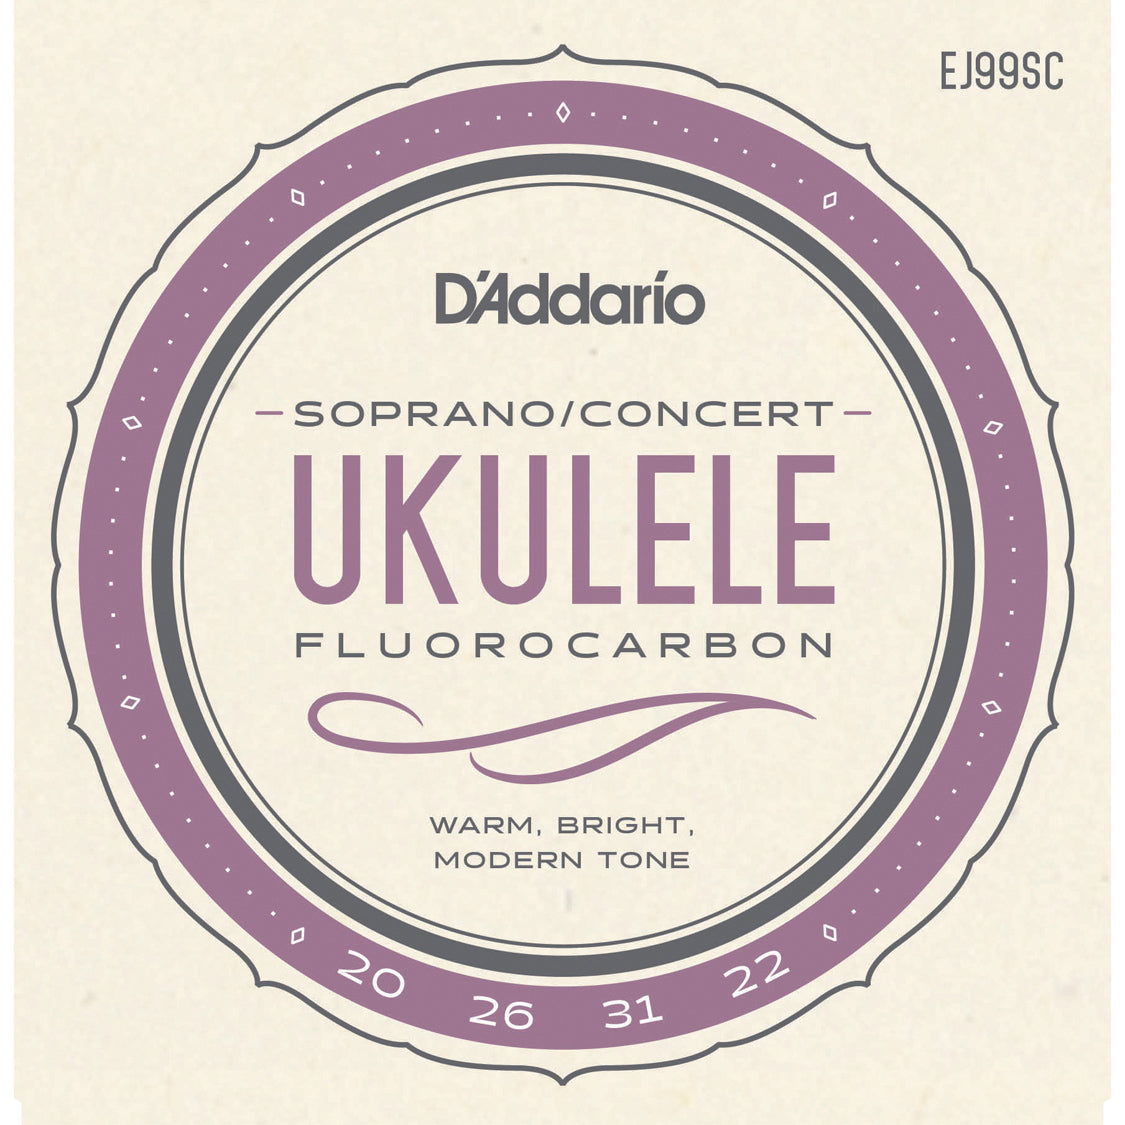 D'Addario EJ99SC FluoroCarbon Ukulele Soprano/Concert